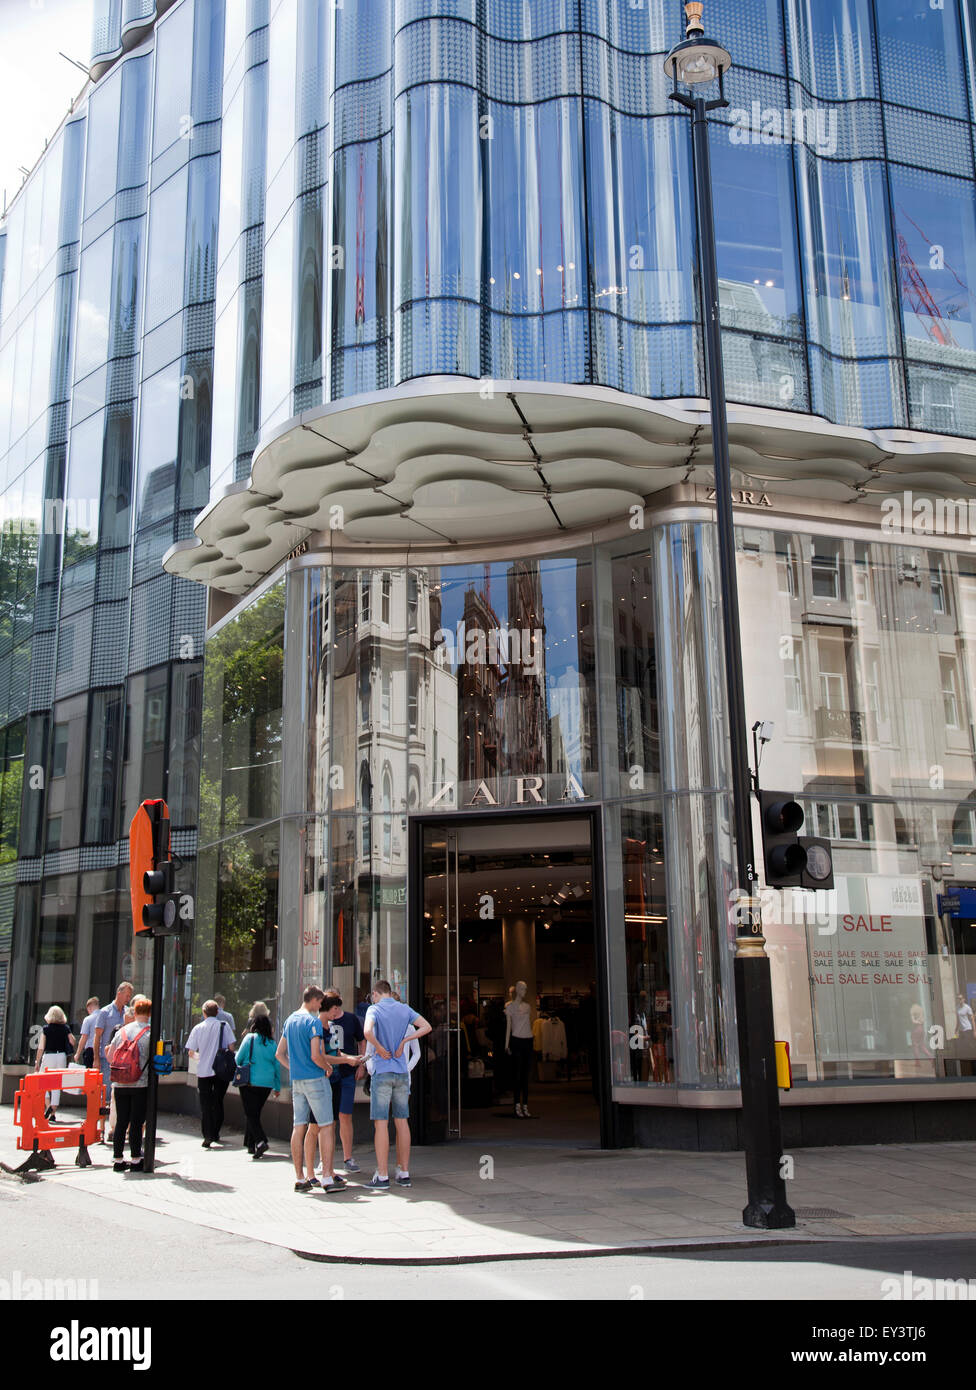 Zara Retail Shop on Oxford Street in London UK Stock Photo - Alamy